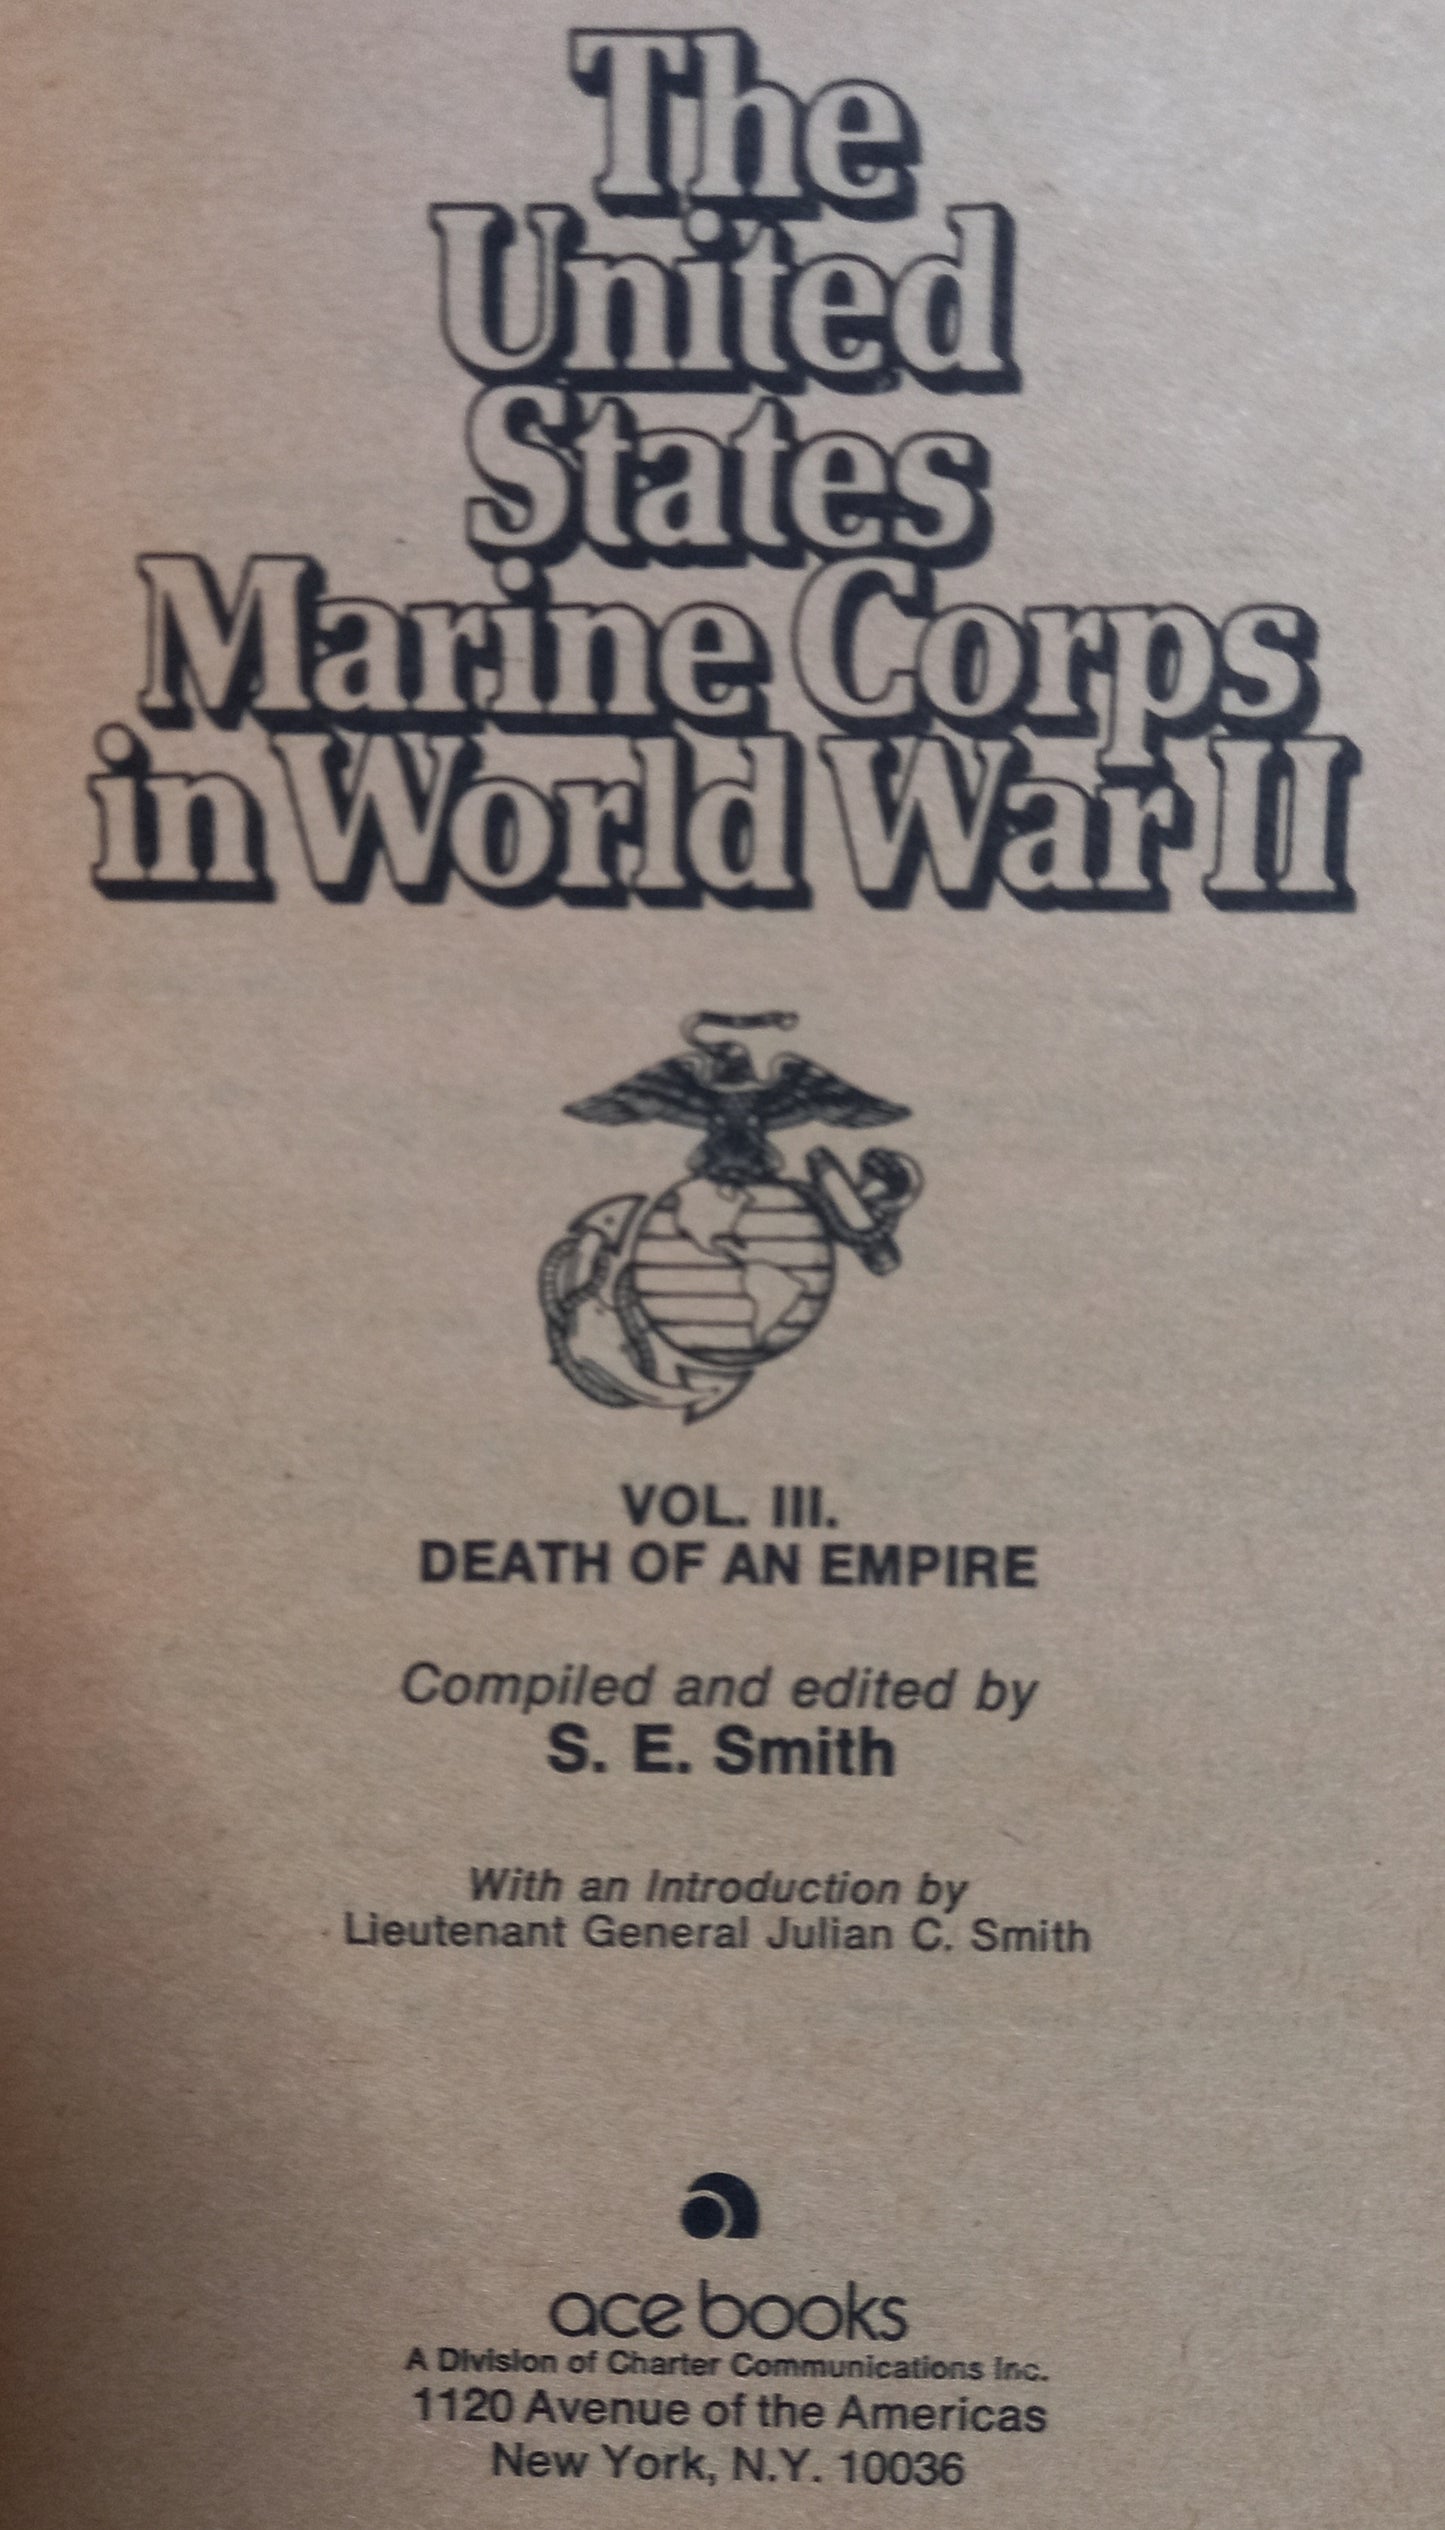 The United States Marine Corps in World War II